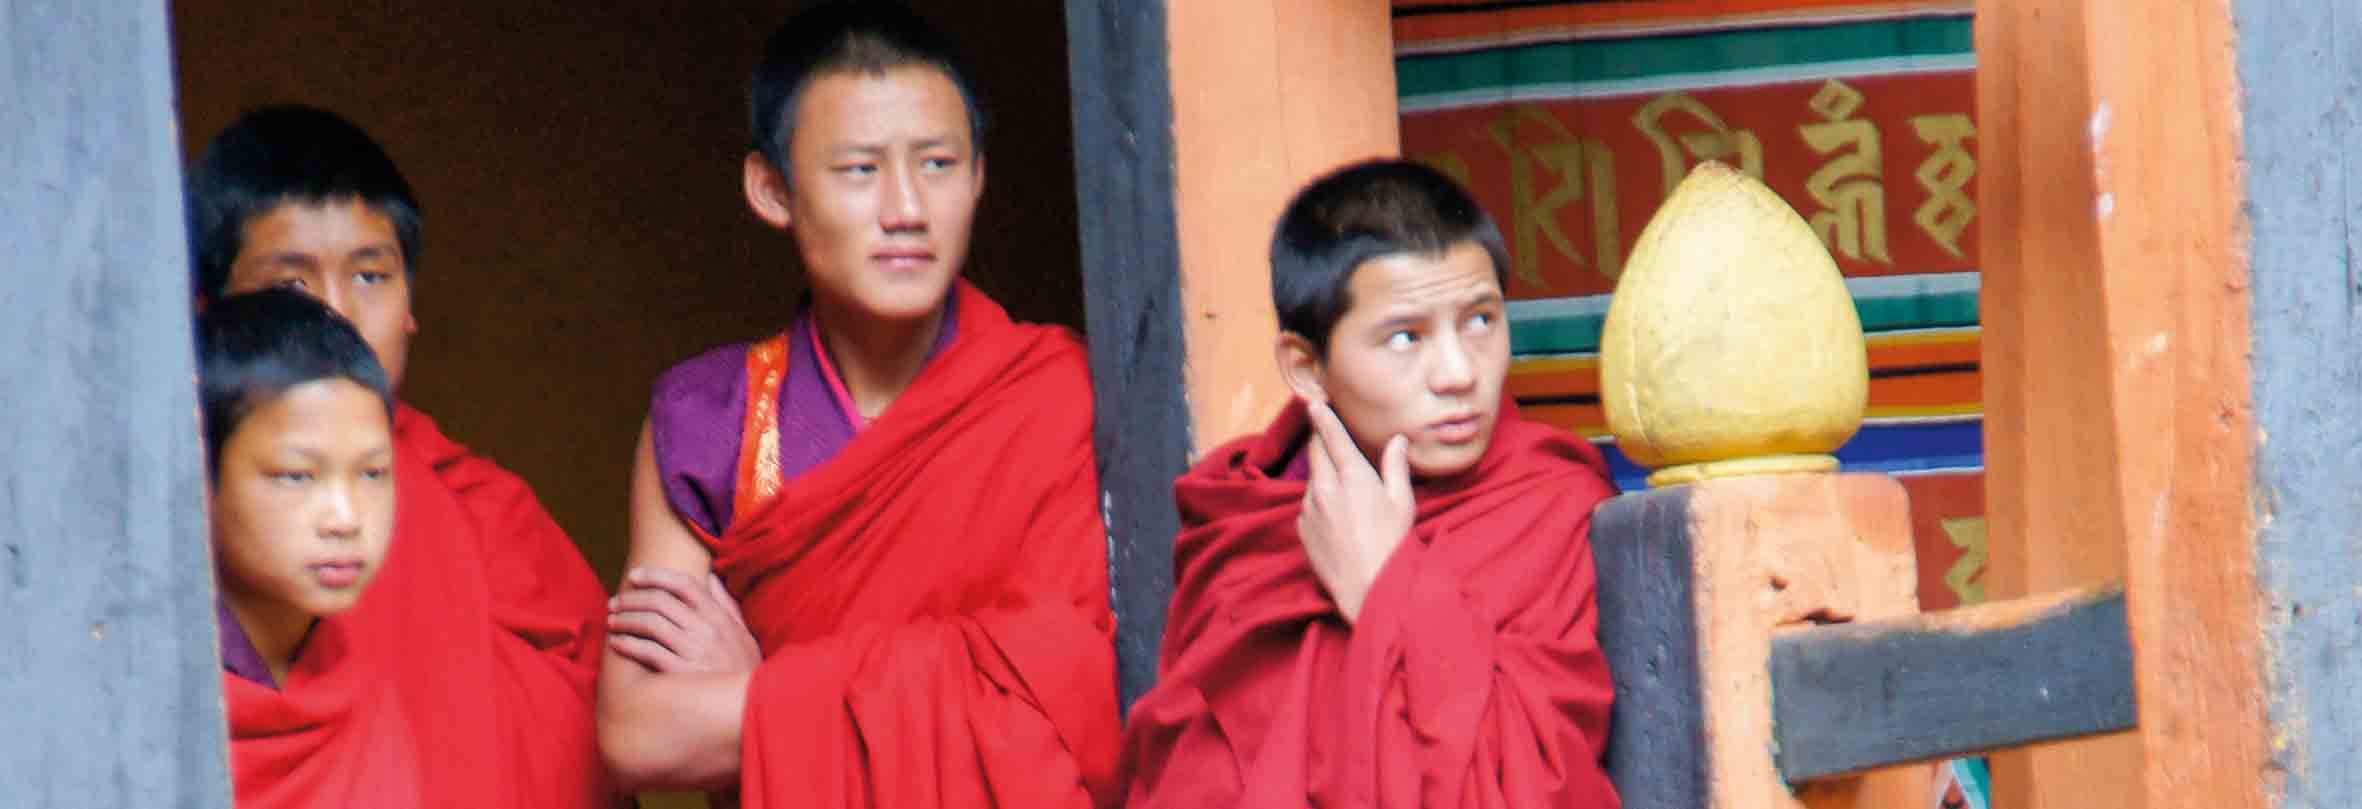 Mönche in Bhutan